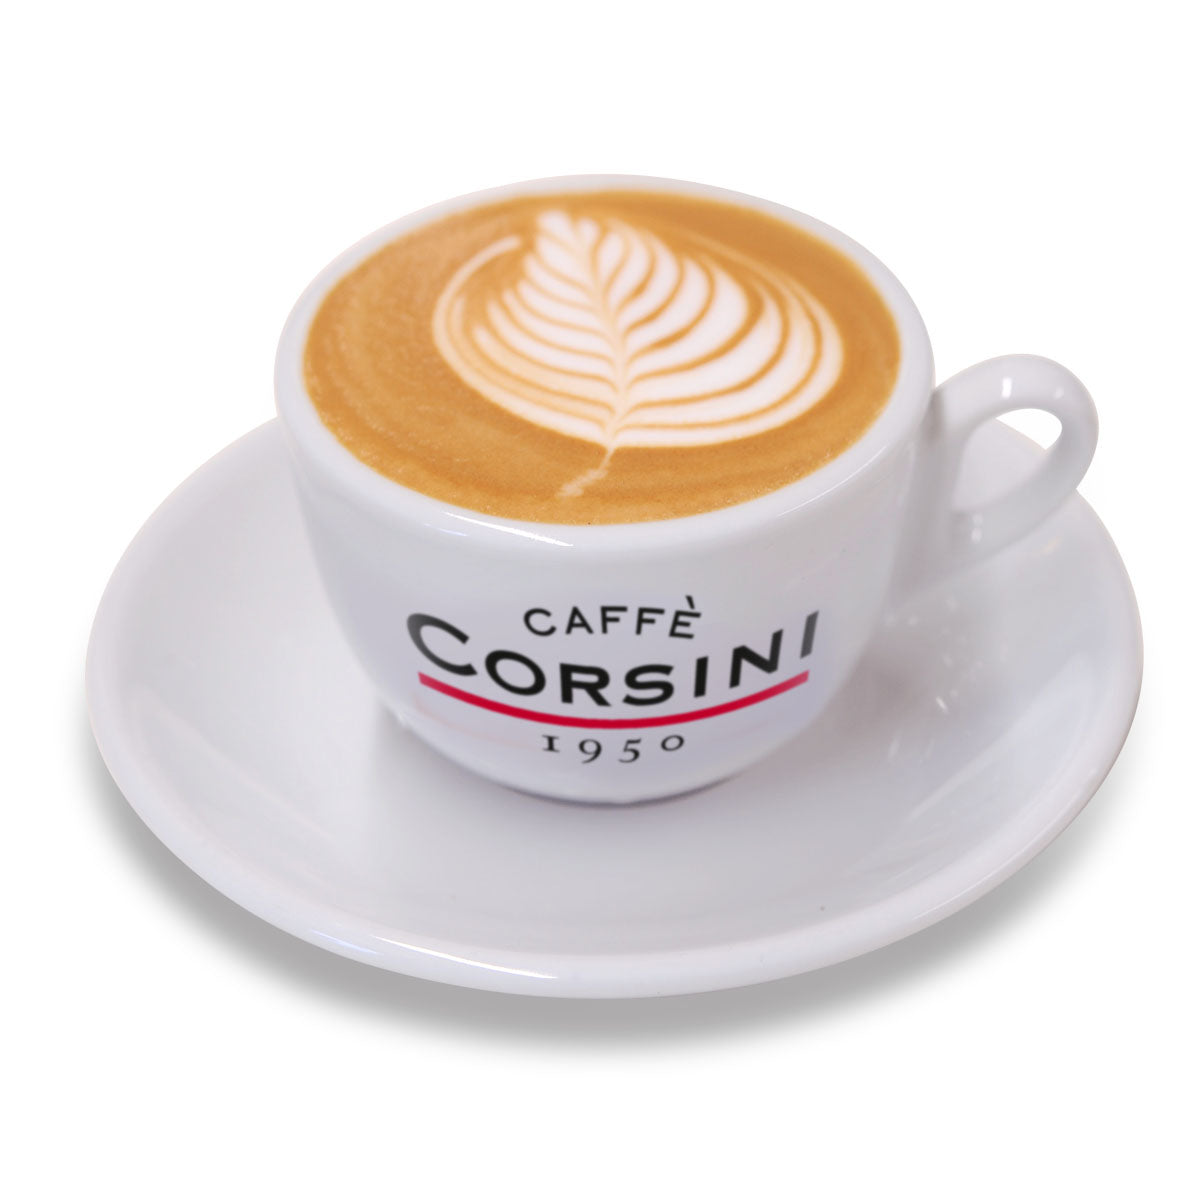 Caffè Corsini porcelain cappuccino cup